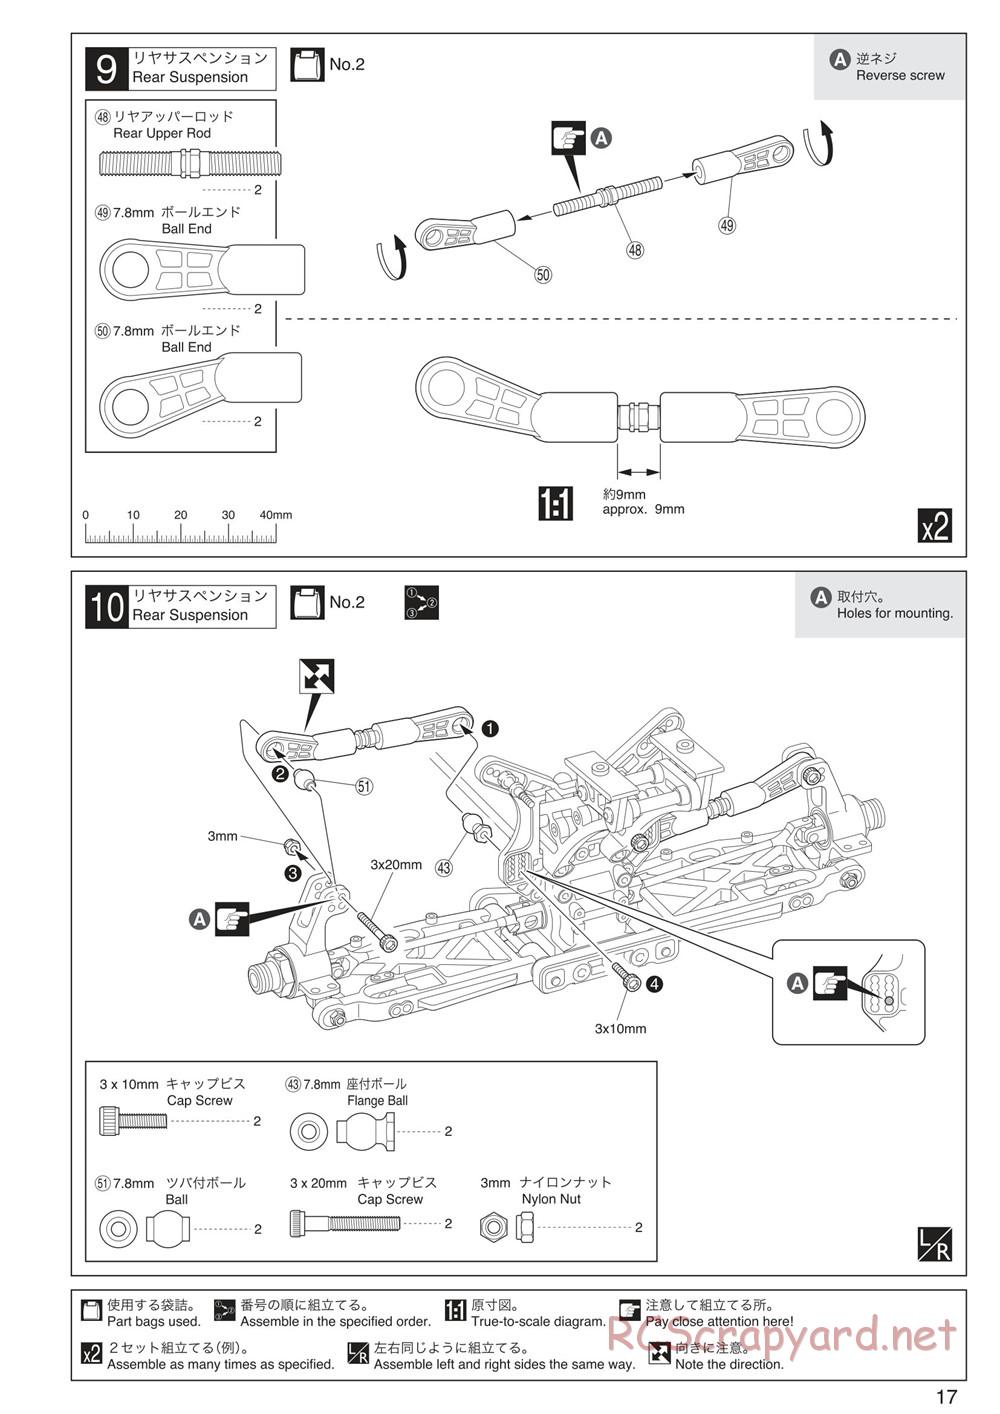 Kyosho - Inferno MP9 TKI3 - Manual - Page 17